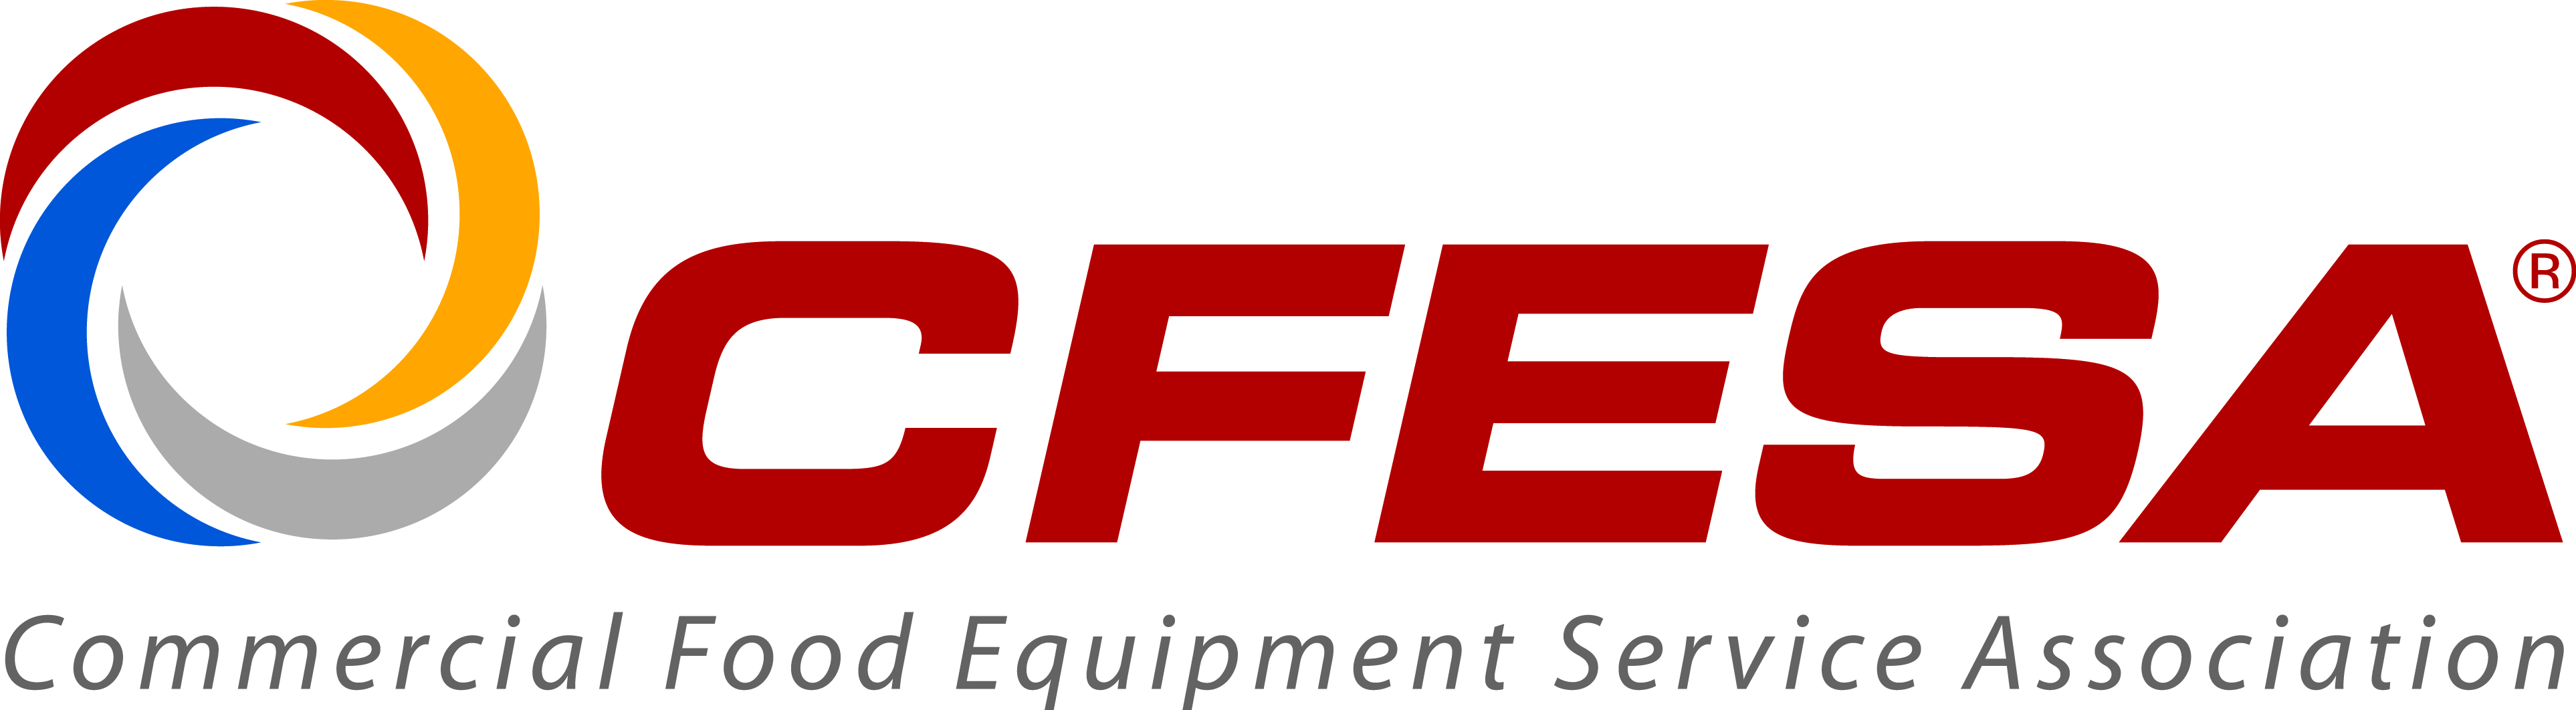 CFESA | Commercial Food Equipment Service Association